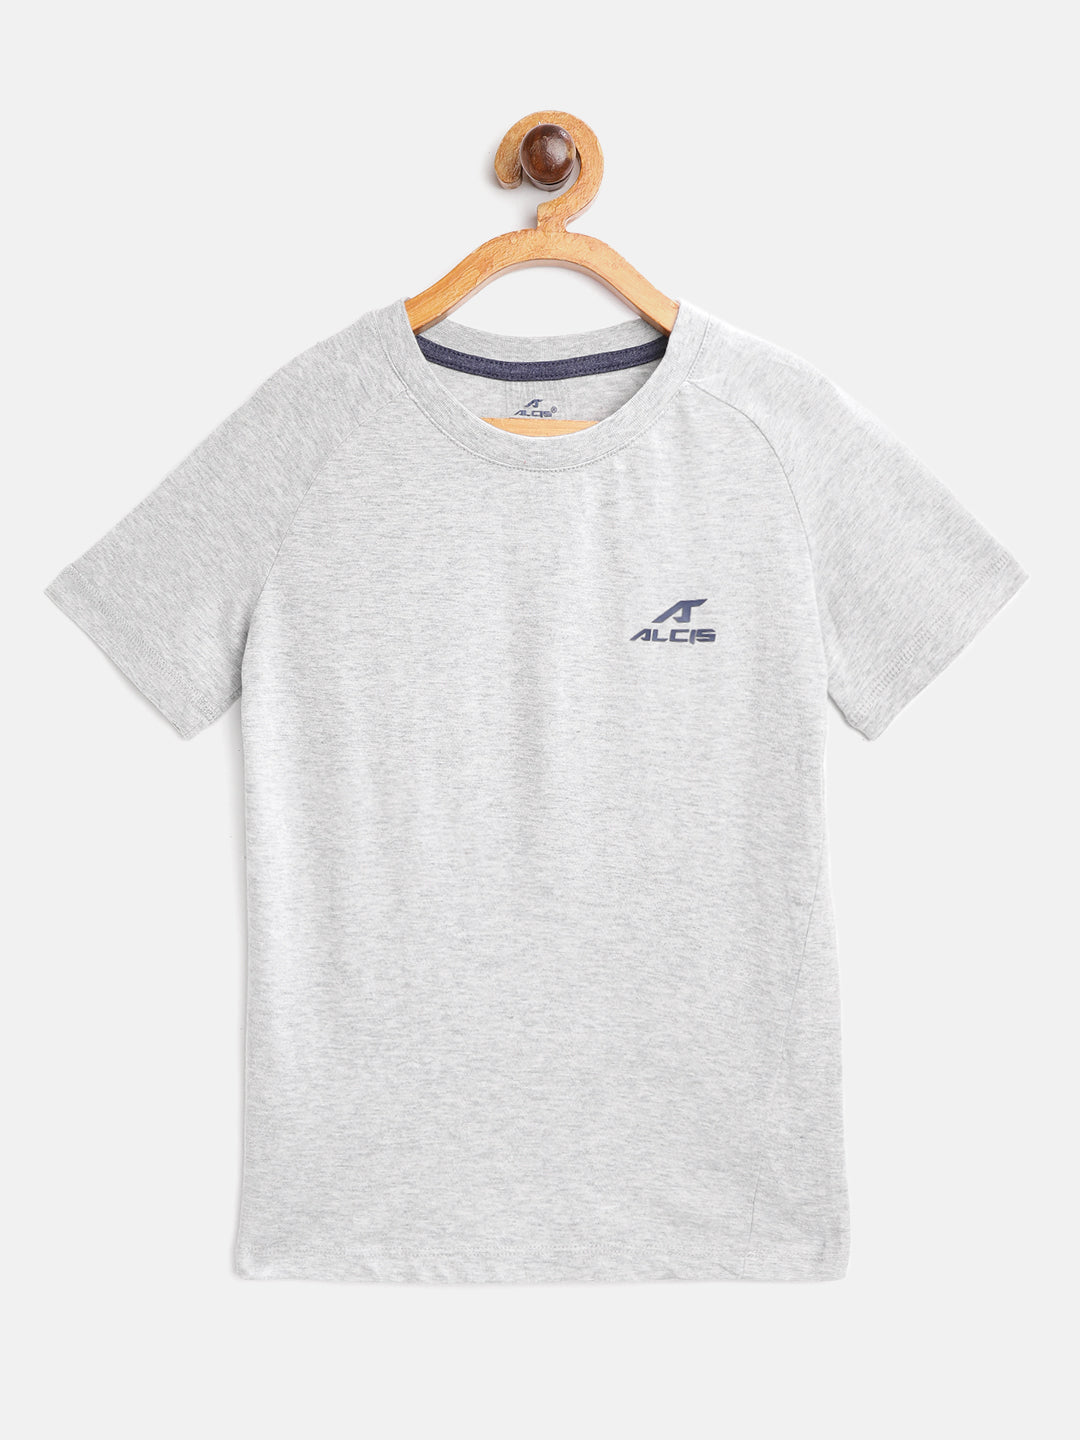 Alcis Boys Grey Melange Printed Back Round Neck T-shirt BTESST2303-4Y